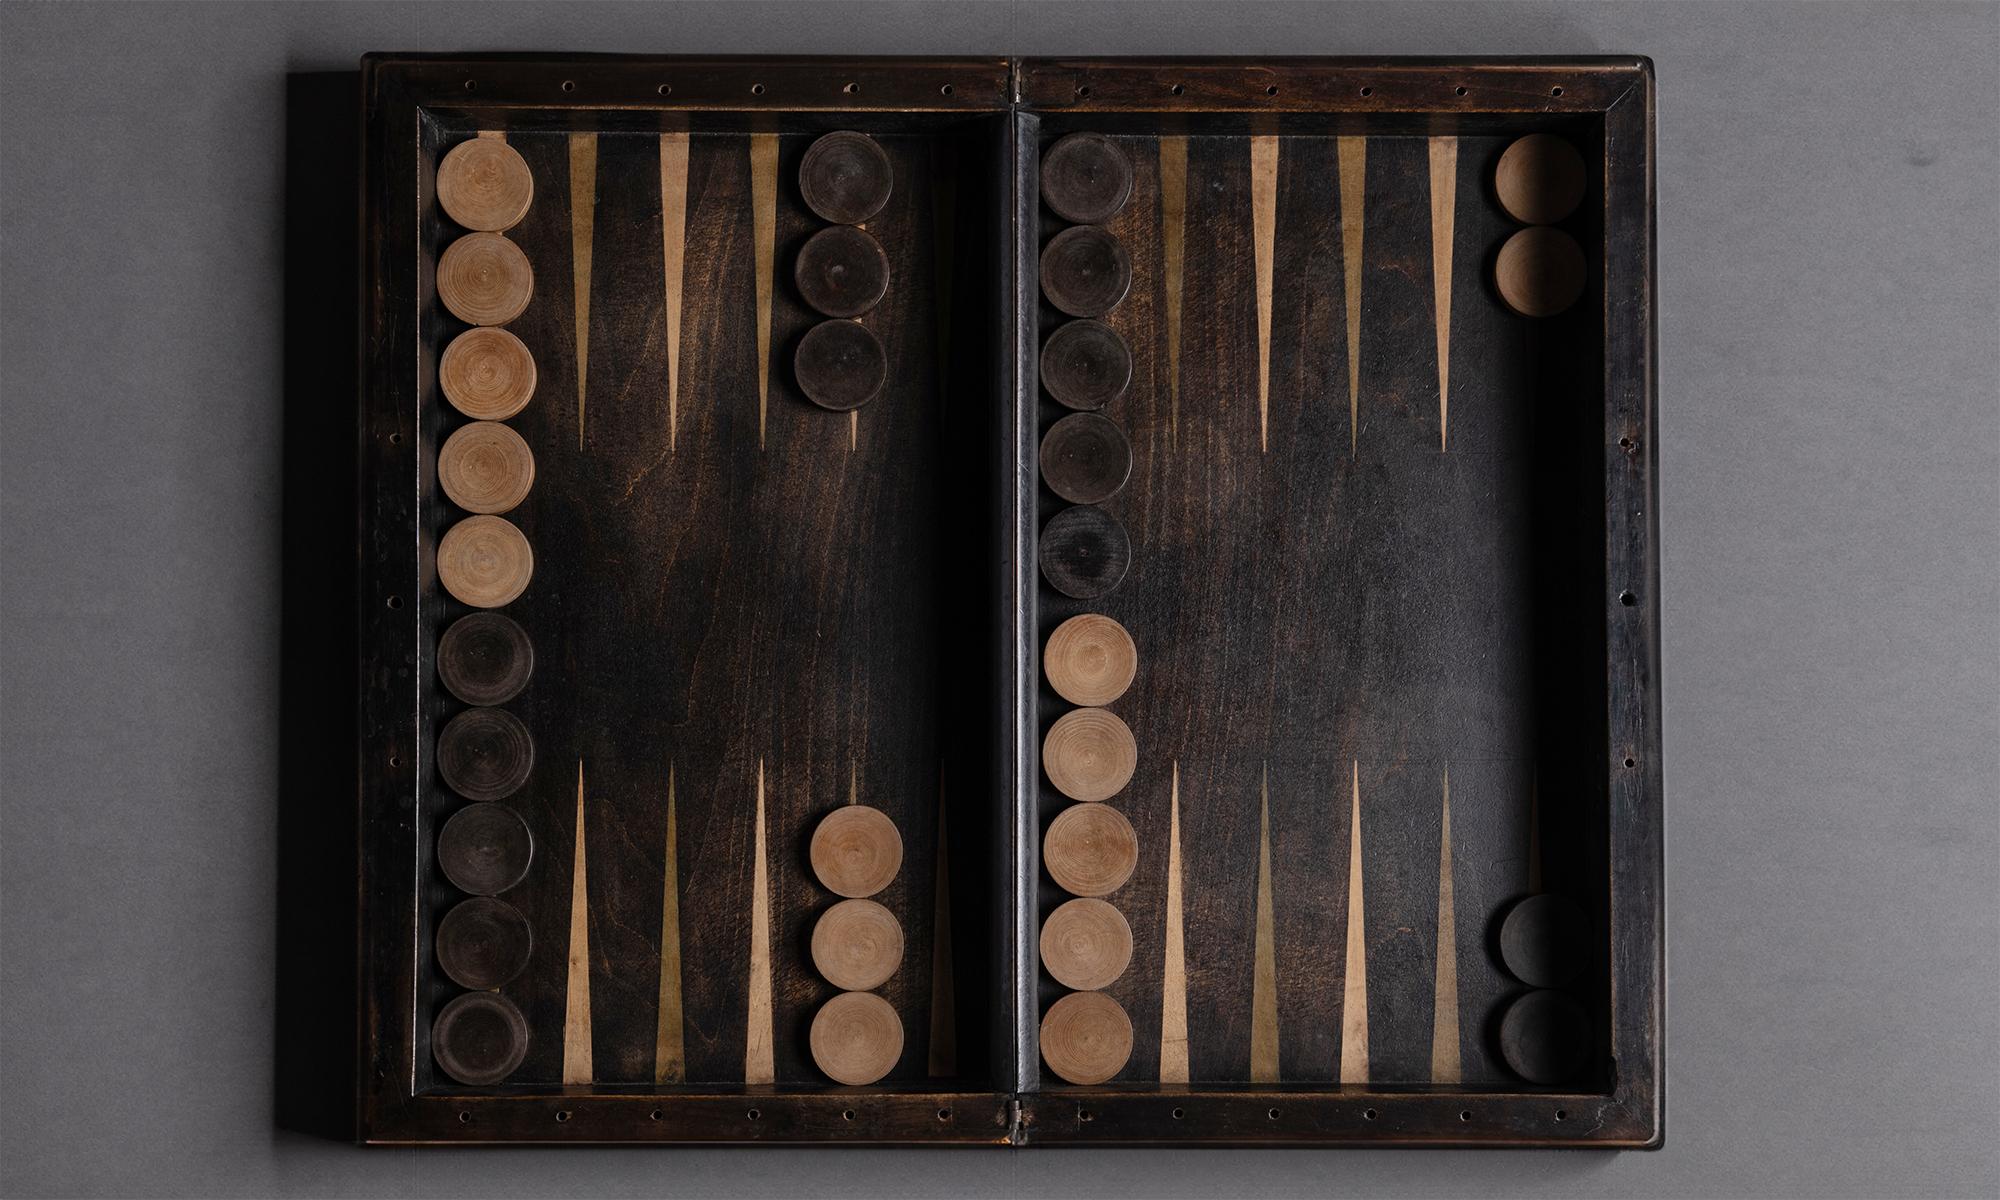 Backgammon Set

Italy circa 1940

CLOSED: 22.75”w x 13.5”d x 5”h OPEN: 27”w x 22.5”d x 2.25”h